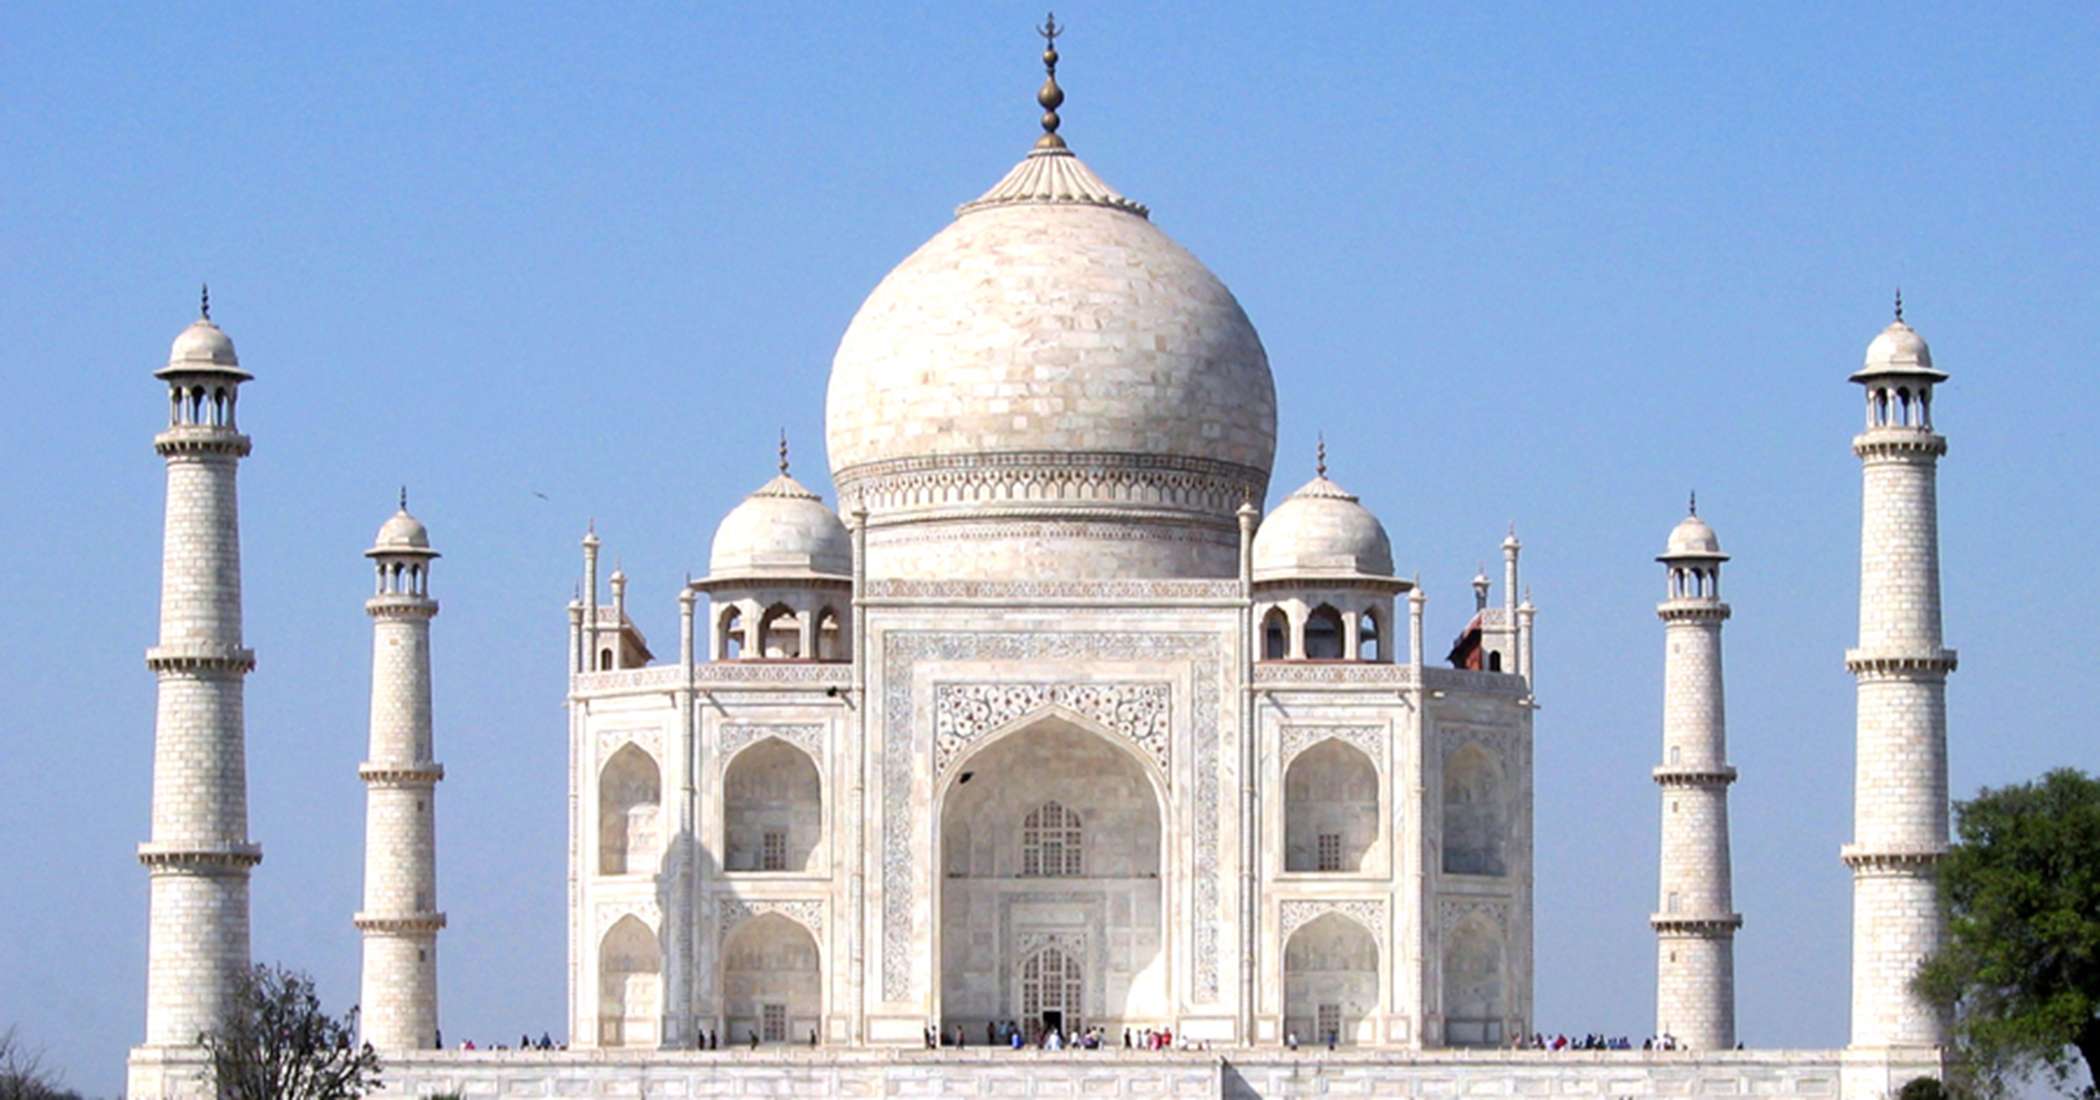 AGRA - City of Taj Mahal